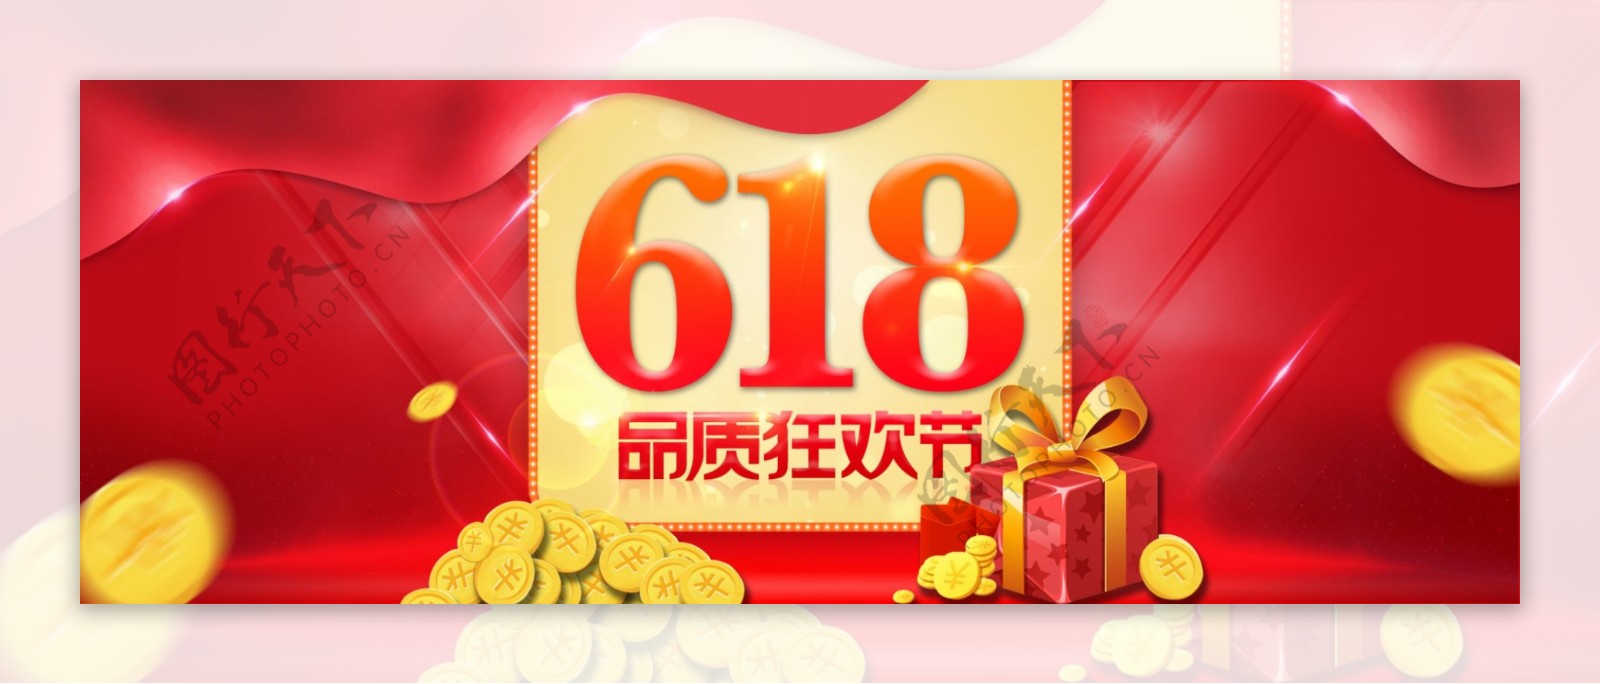 电商618品质狂欢节年中大促海报banner